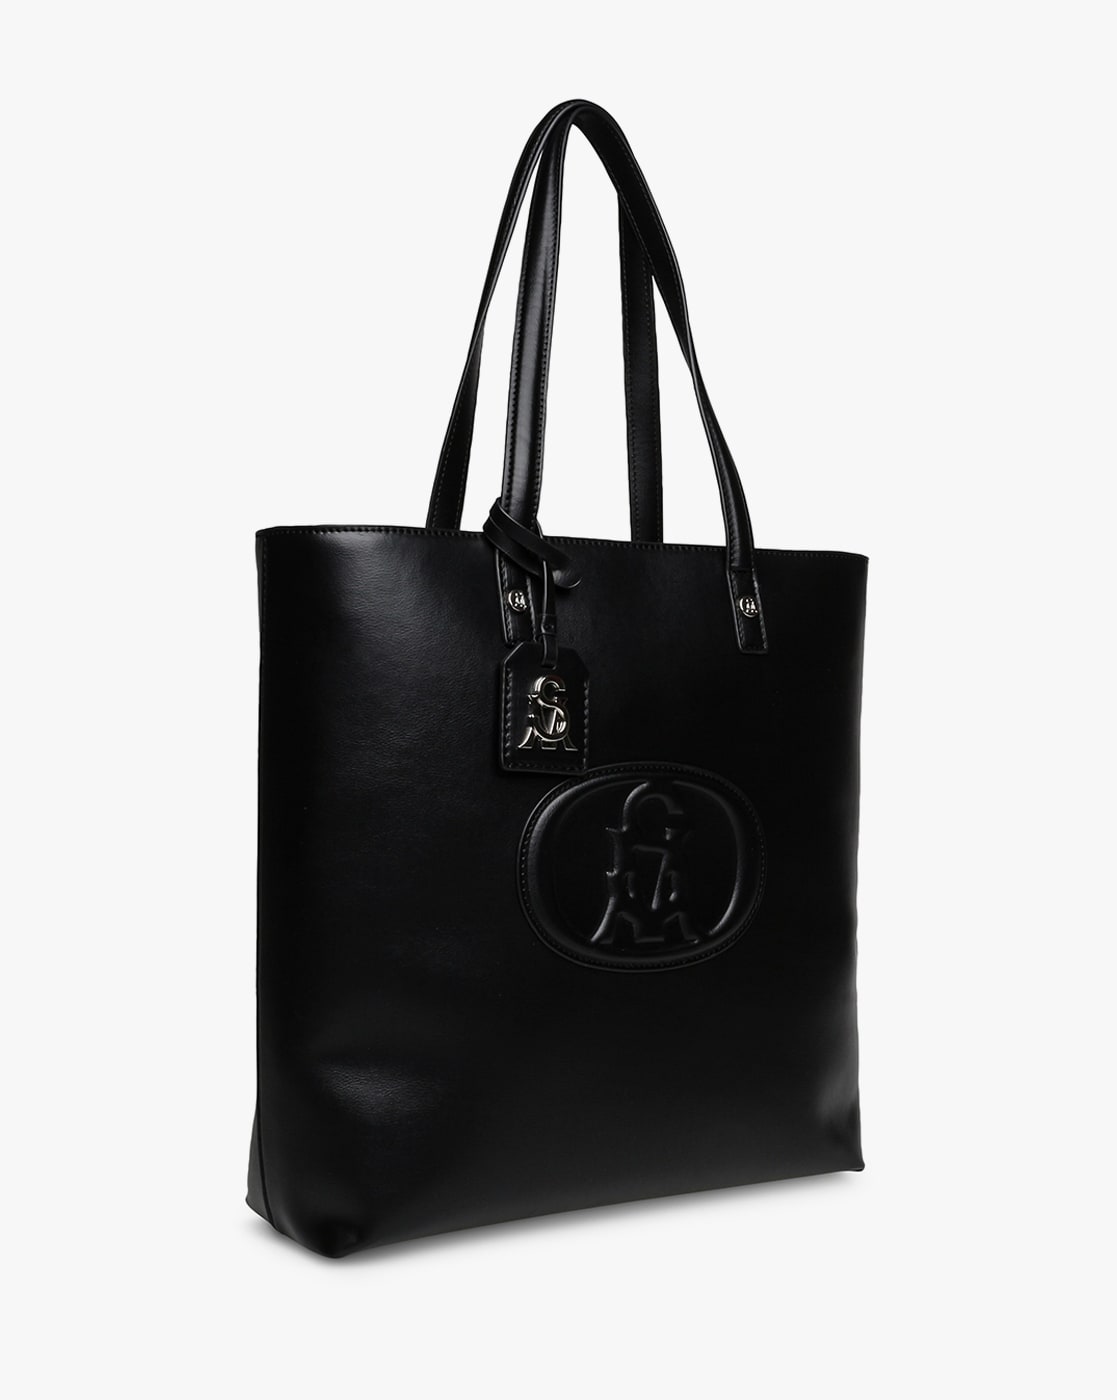 Patent leather handbag Armani Jeans Black in Patent leather - 39247959